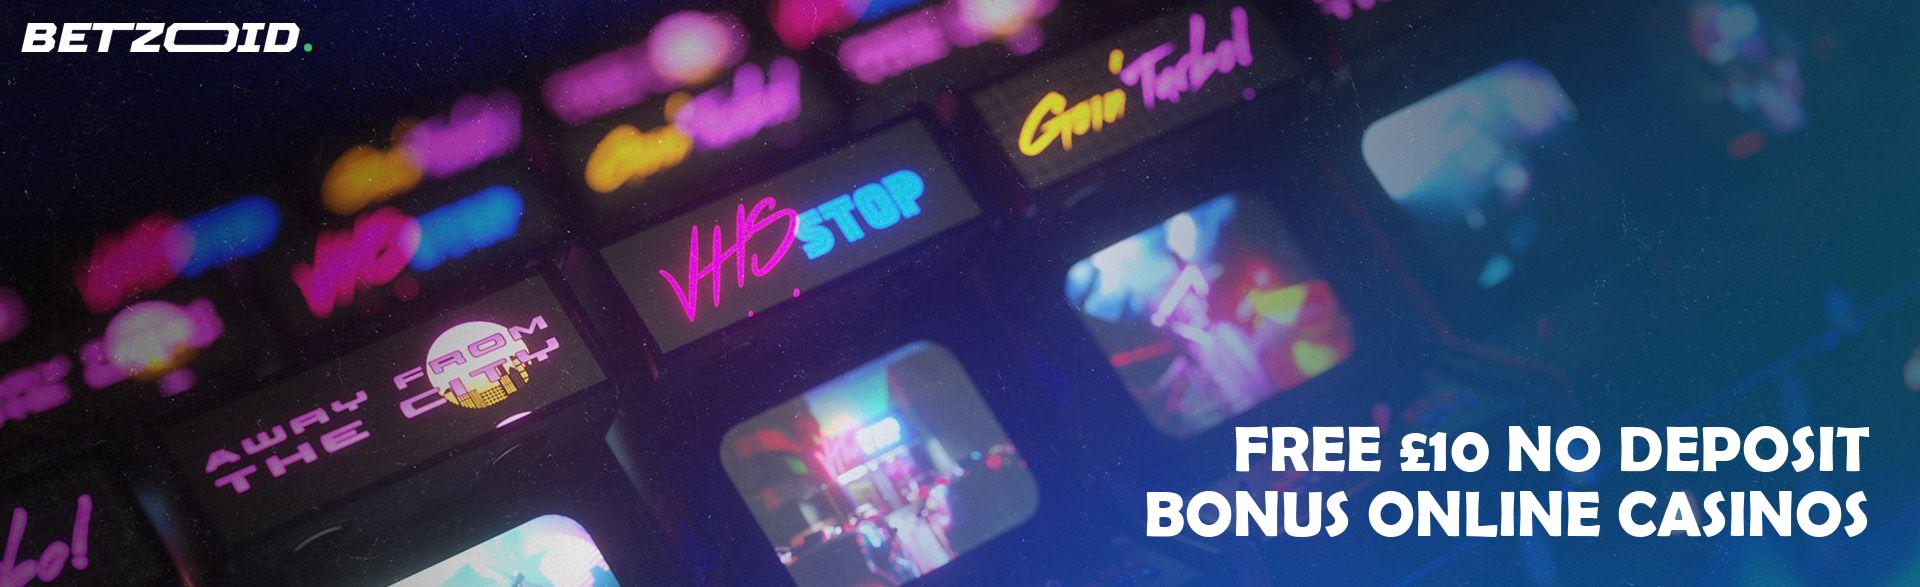 Free £10 No Deposit Bonus Online Casinos.